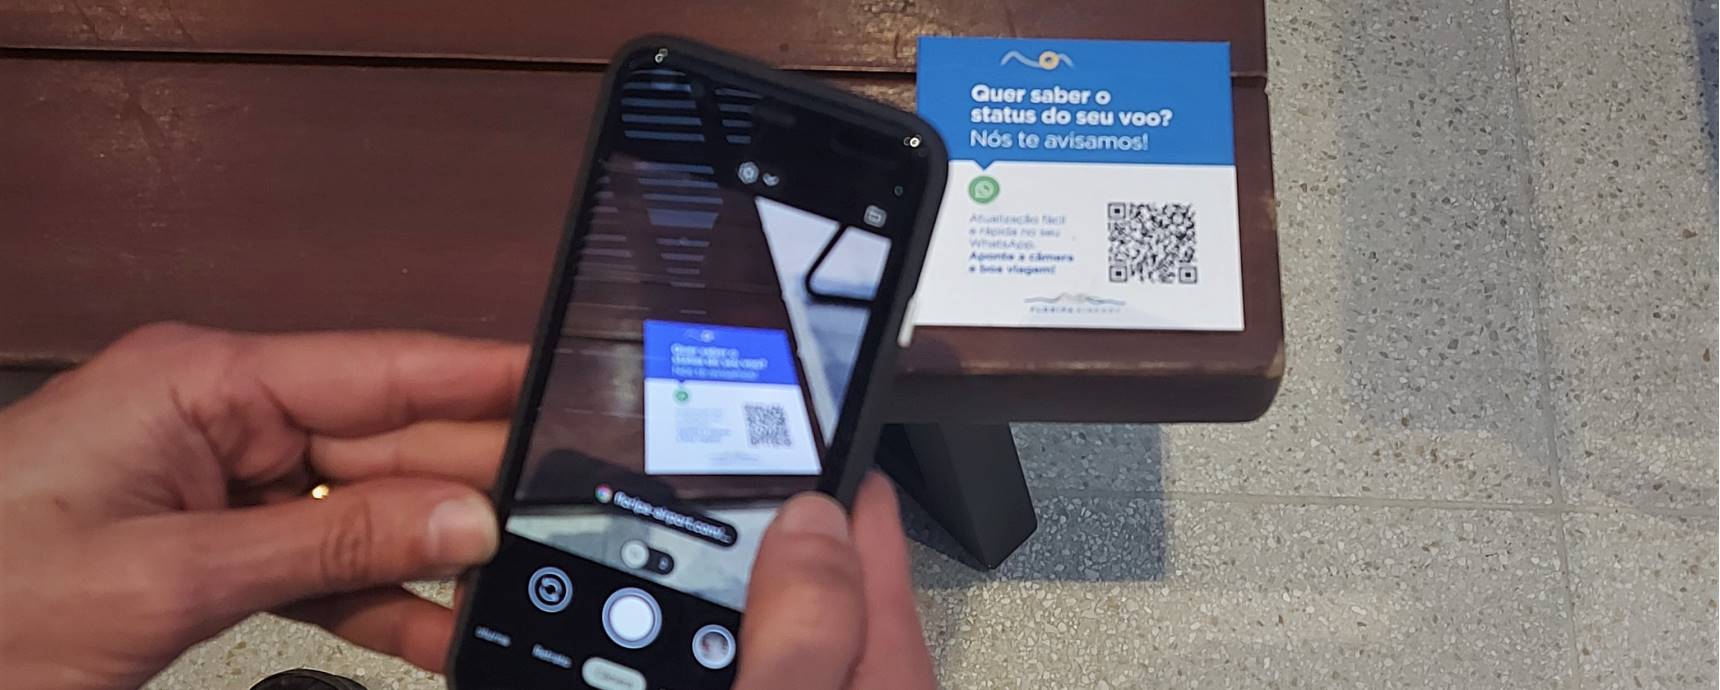 Zurich Airport Brasil testa serviço de mensagem sobre status de voos pelo WhatsApp